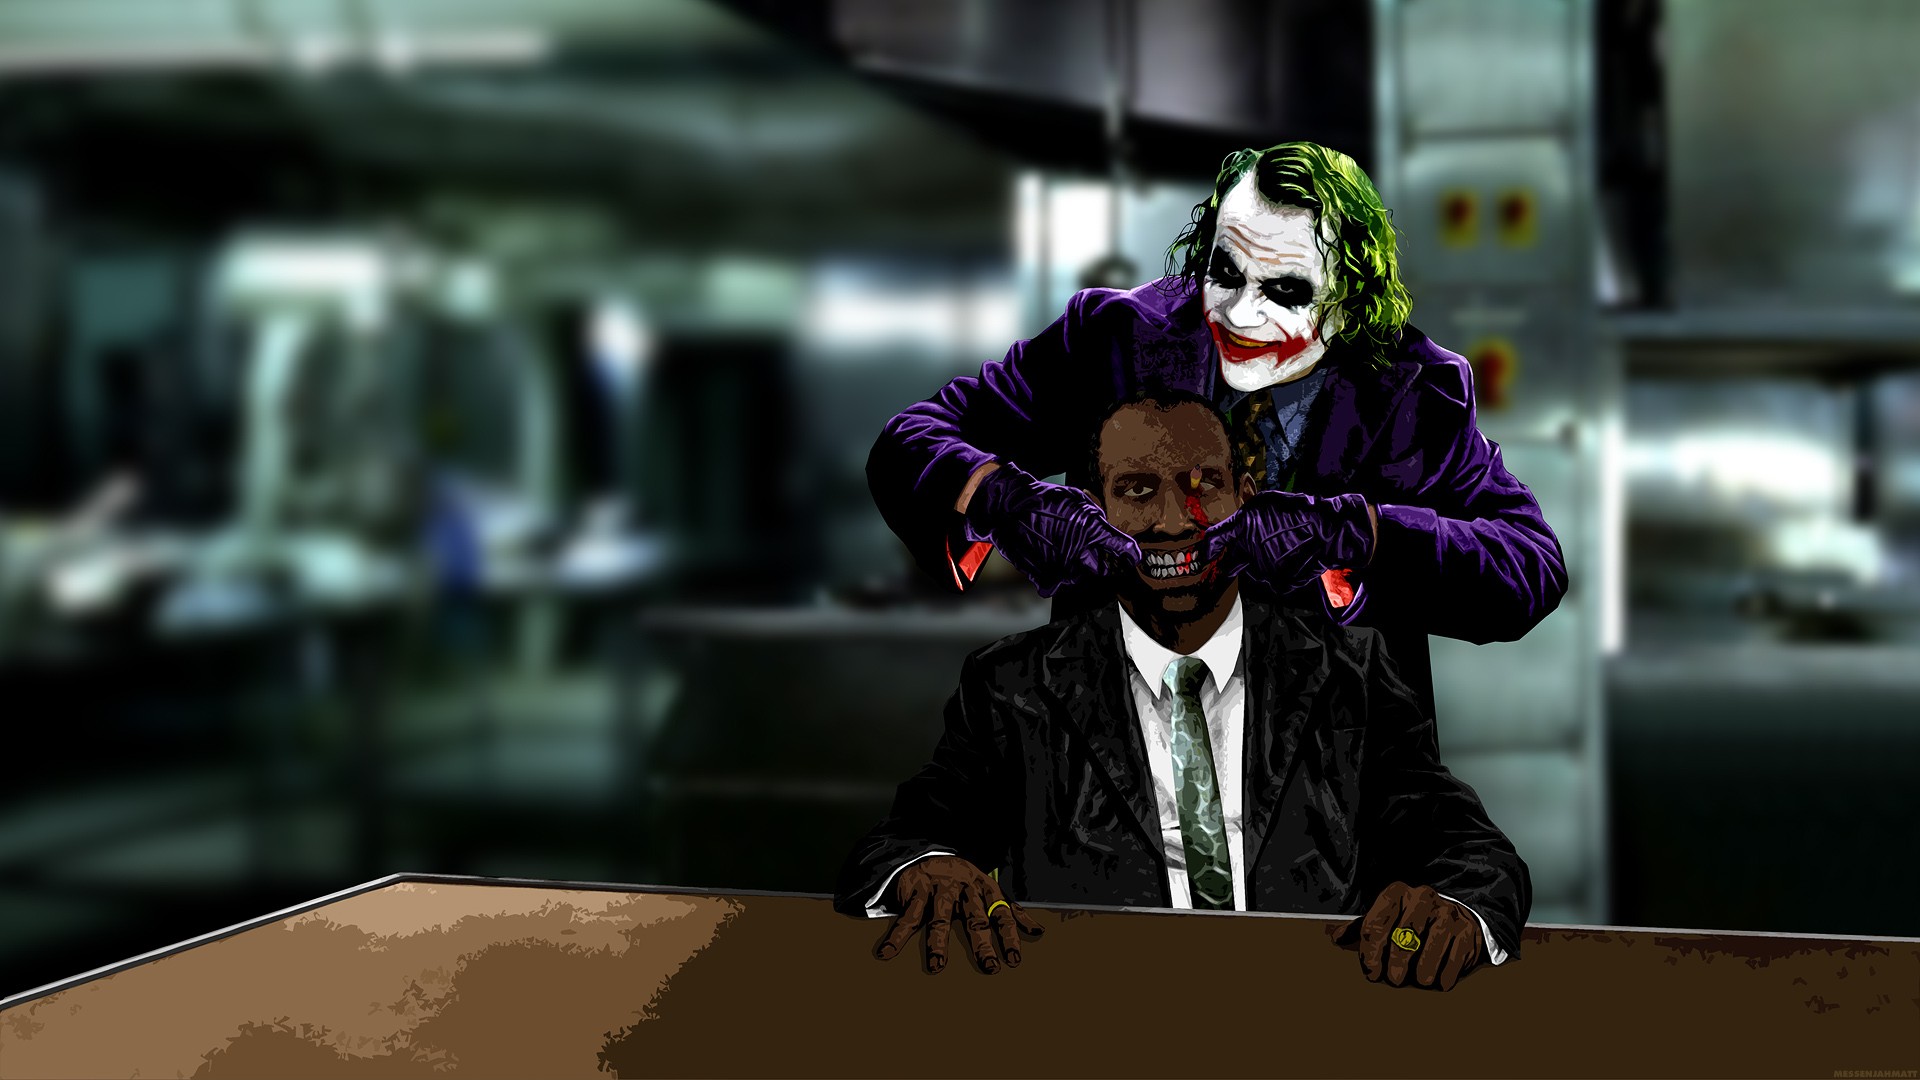 General 1920x1080 Joker MessenjahMatt The Dark Knight Batman artwork Heath Ledger smiling green hair movies